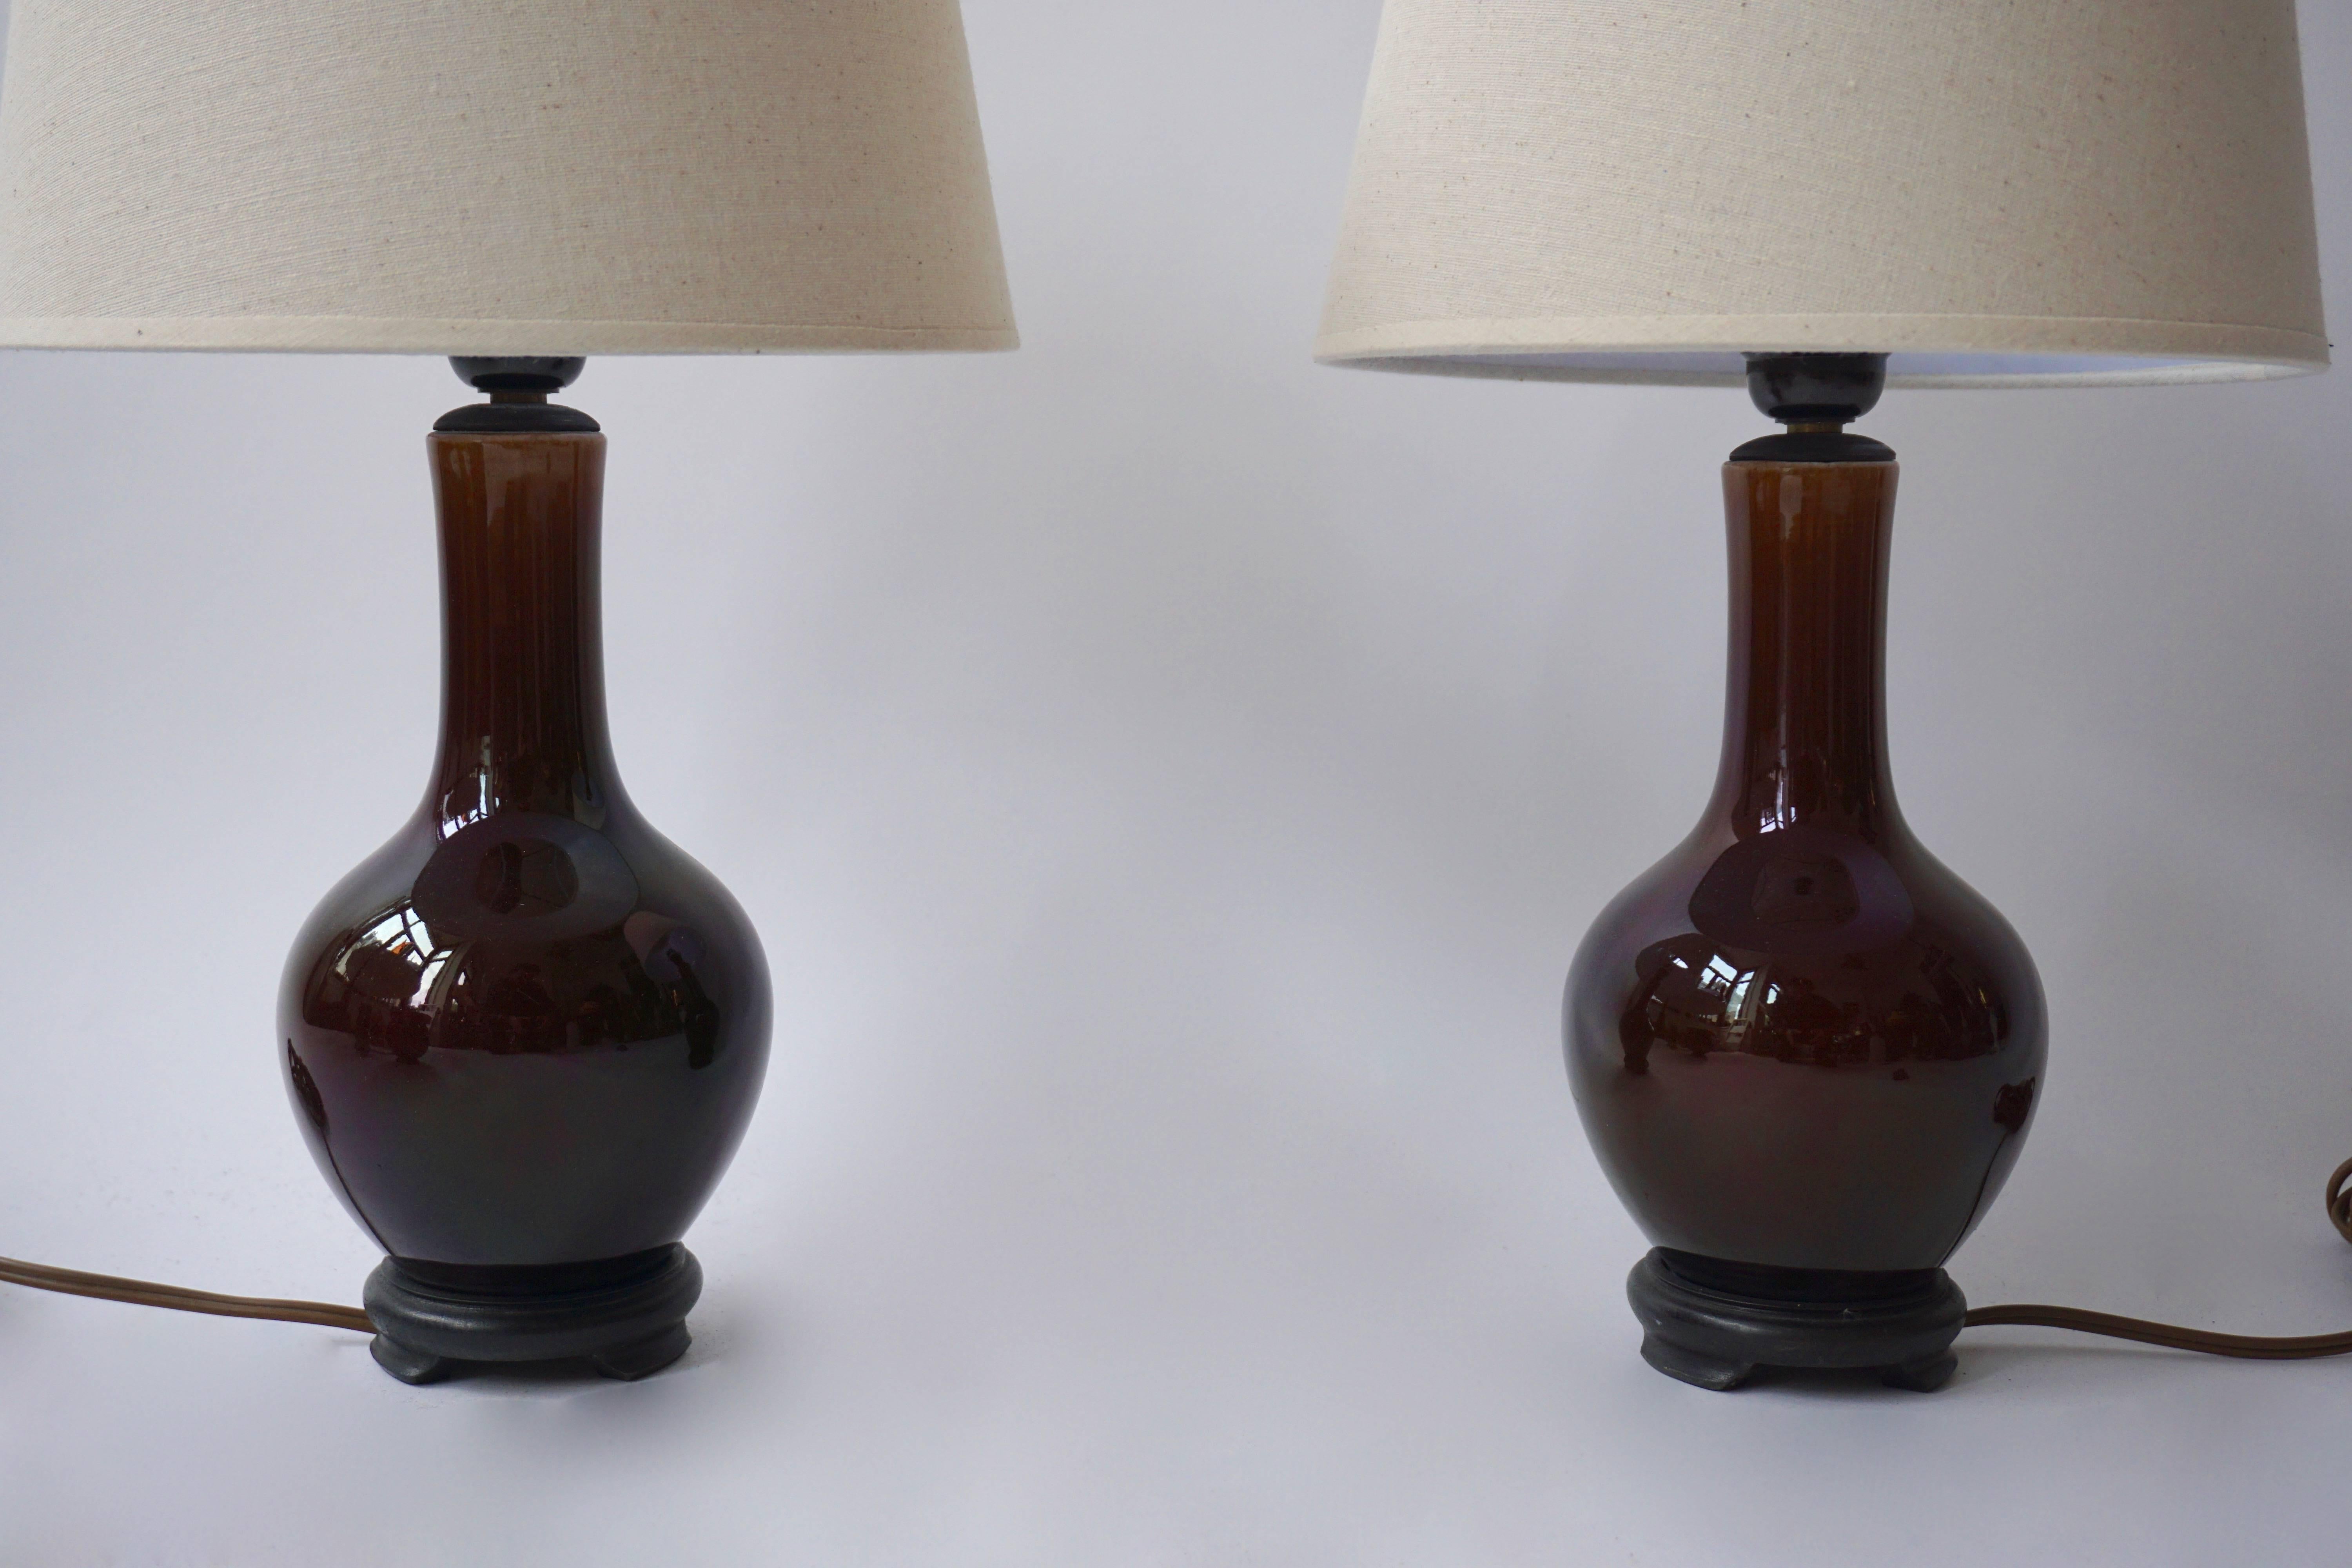 Two ceramic table lamps.
Measures: Height 41 cm.
Diameter 24 cm.